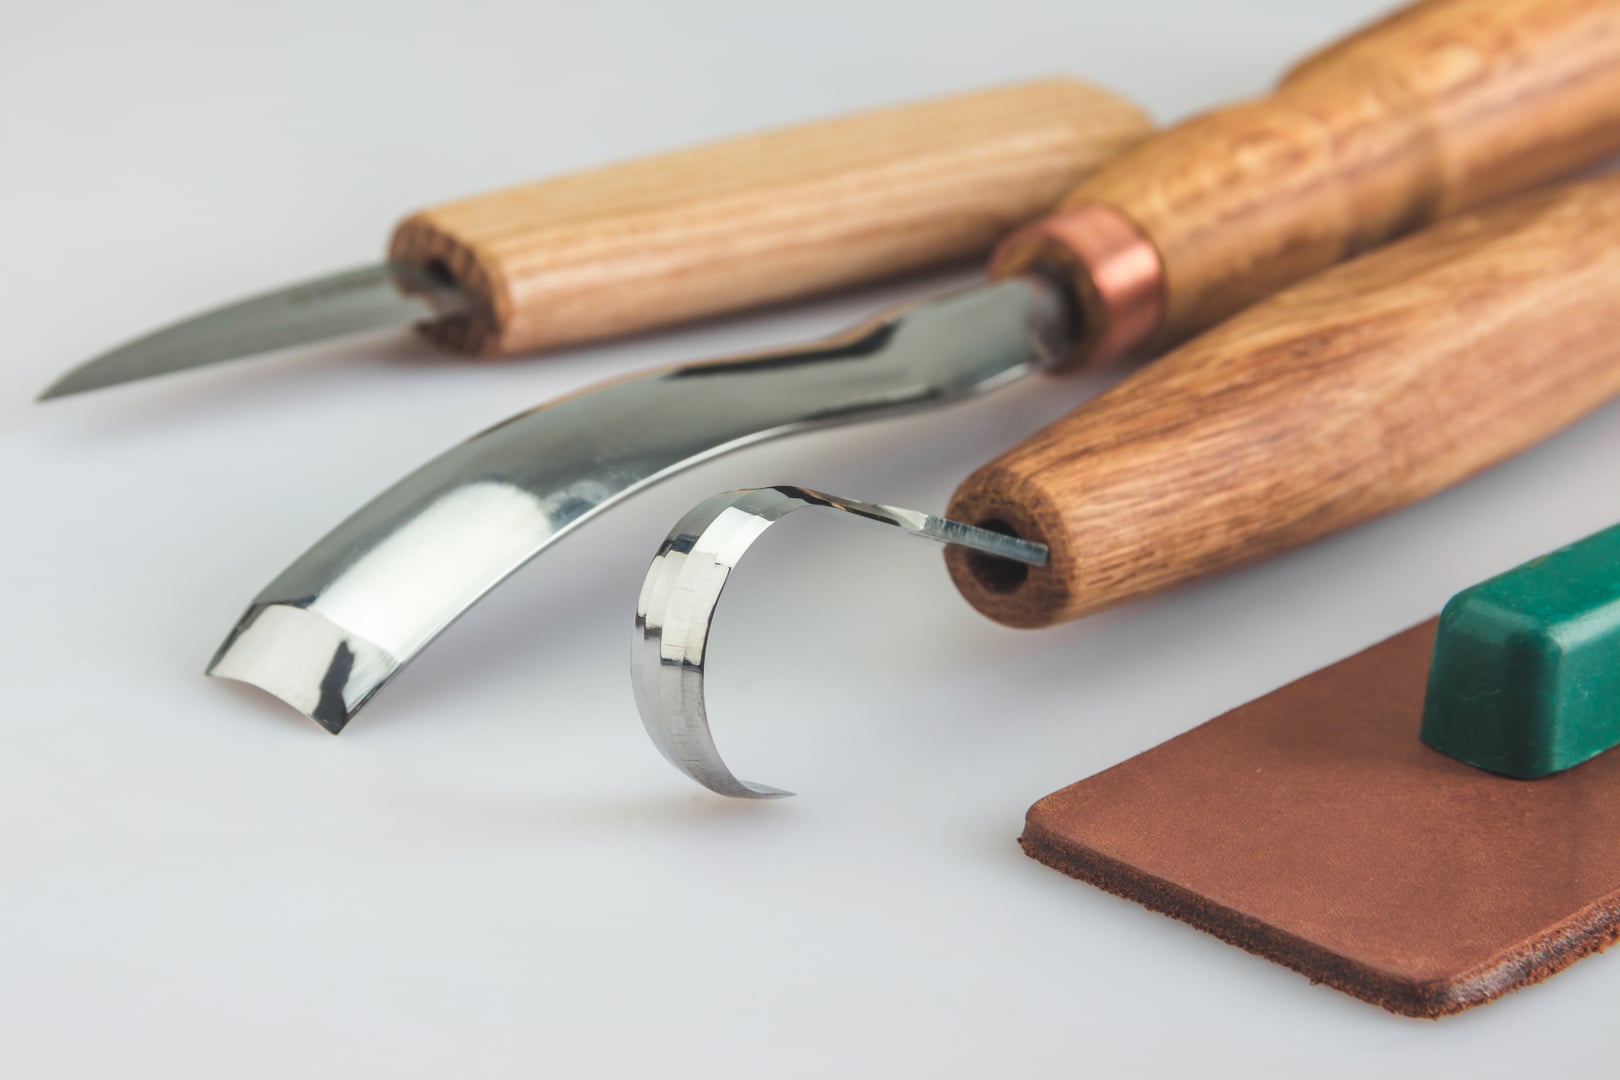 Edward Tools edward tools wood chisel set - 1, 3/4, 1/2 wood